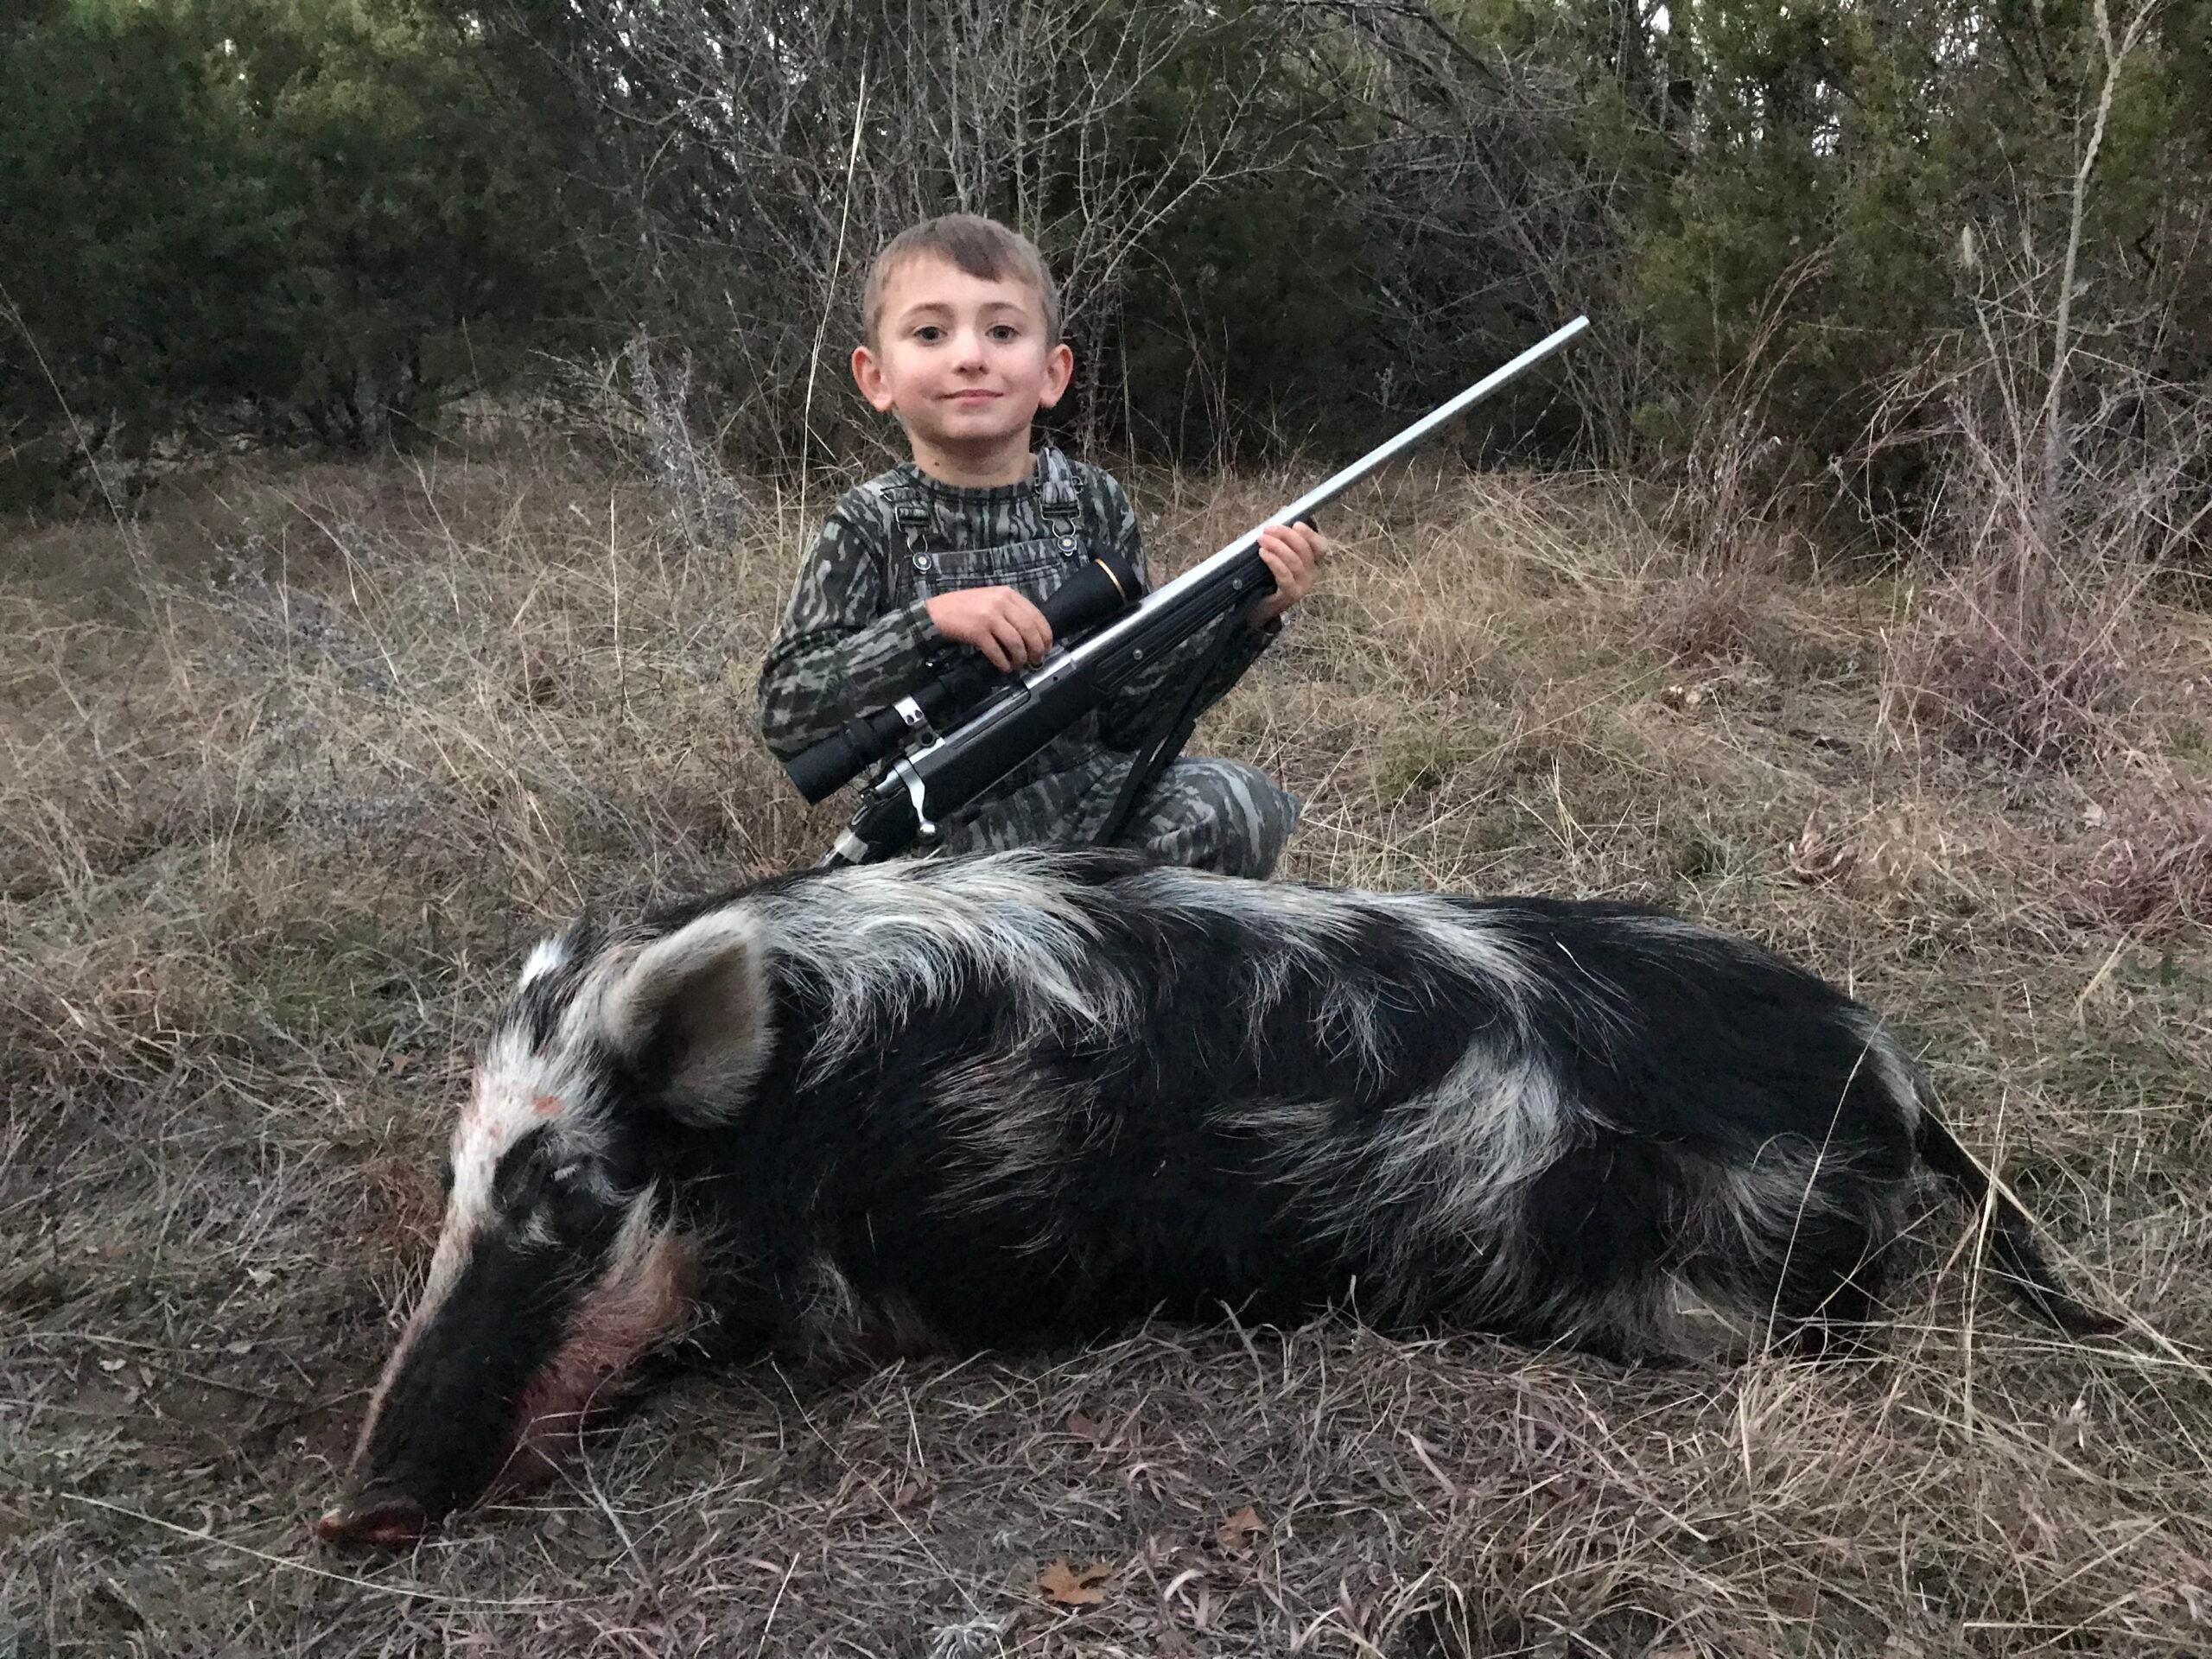 Boy with a rifle sitting next to a dead hog.